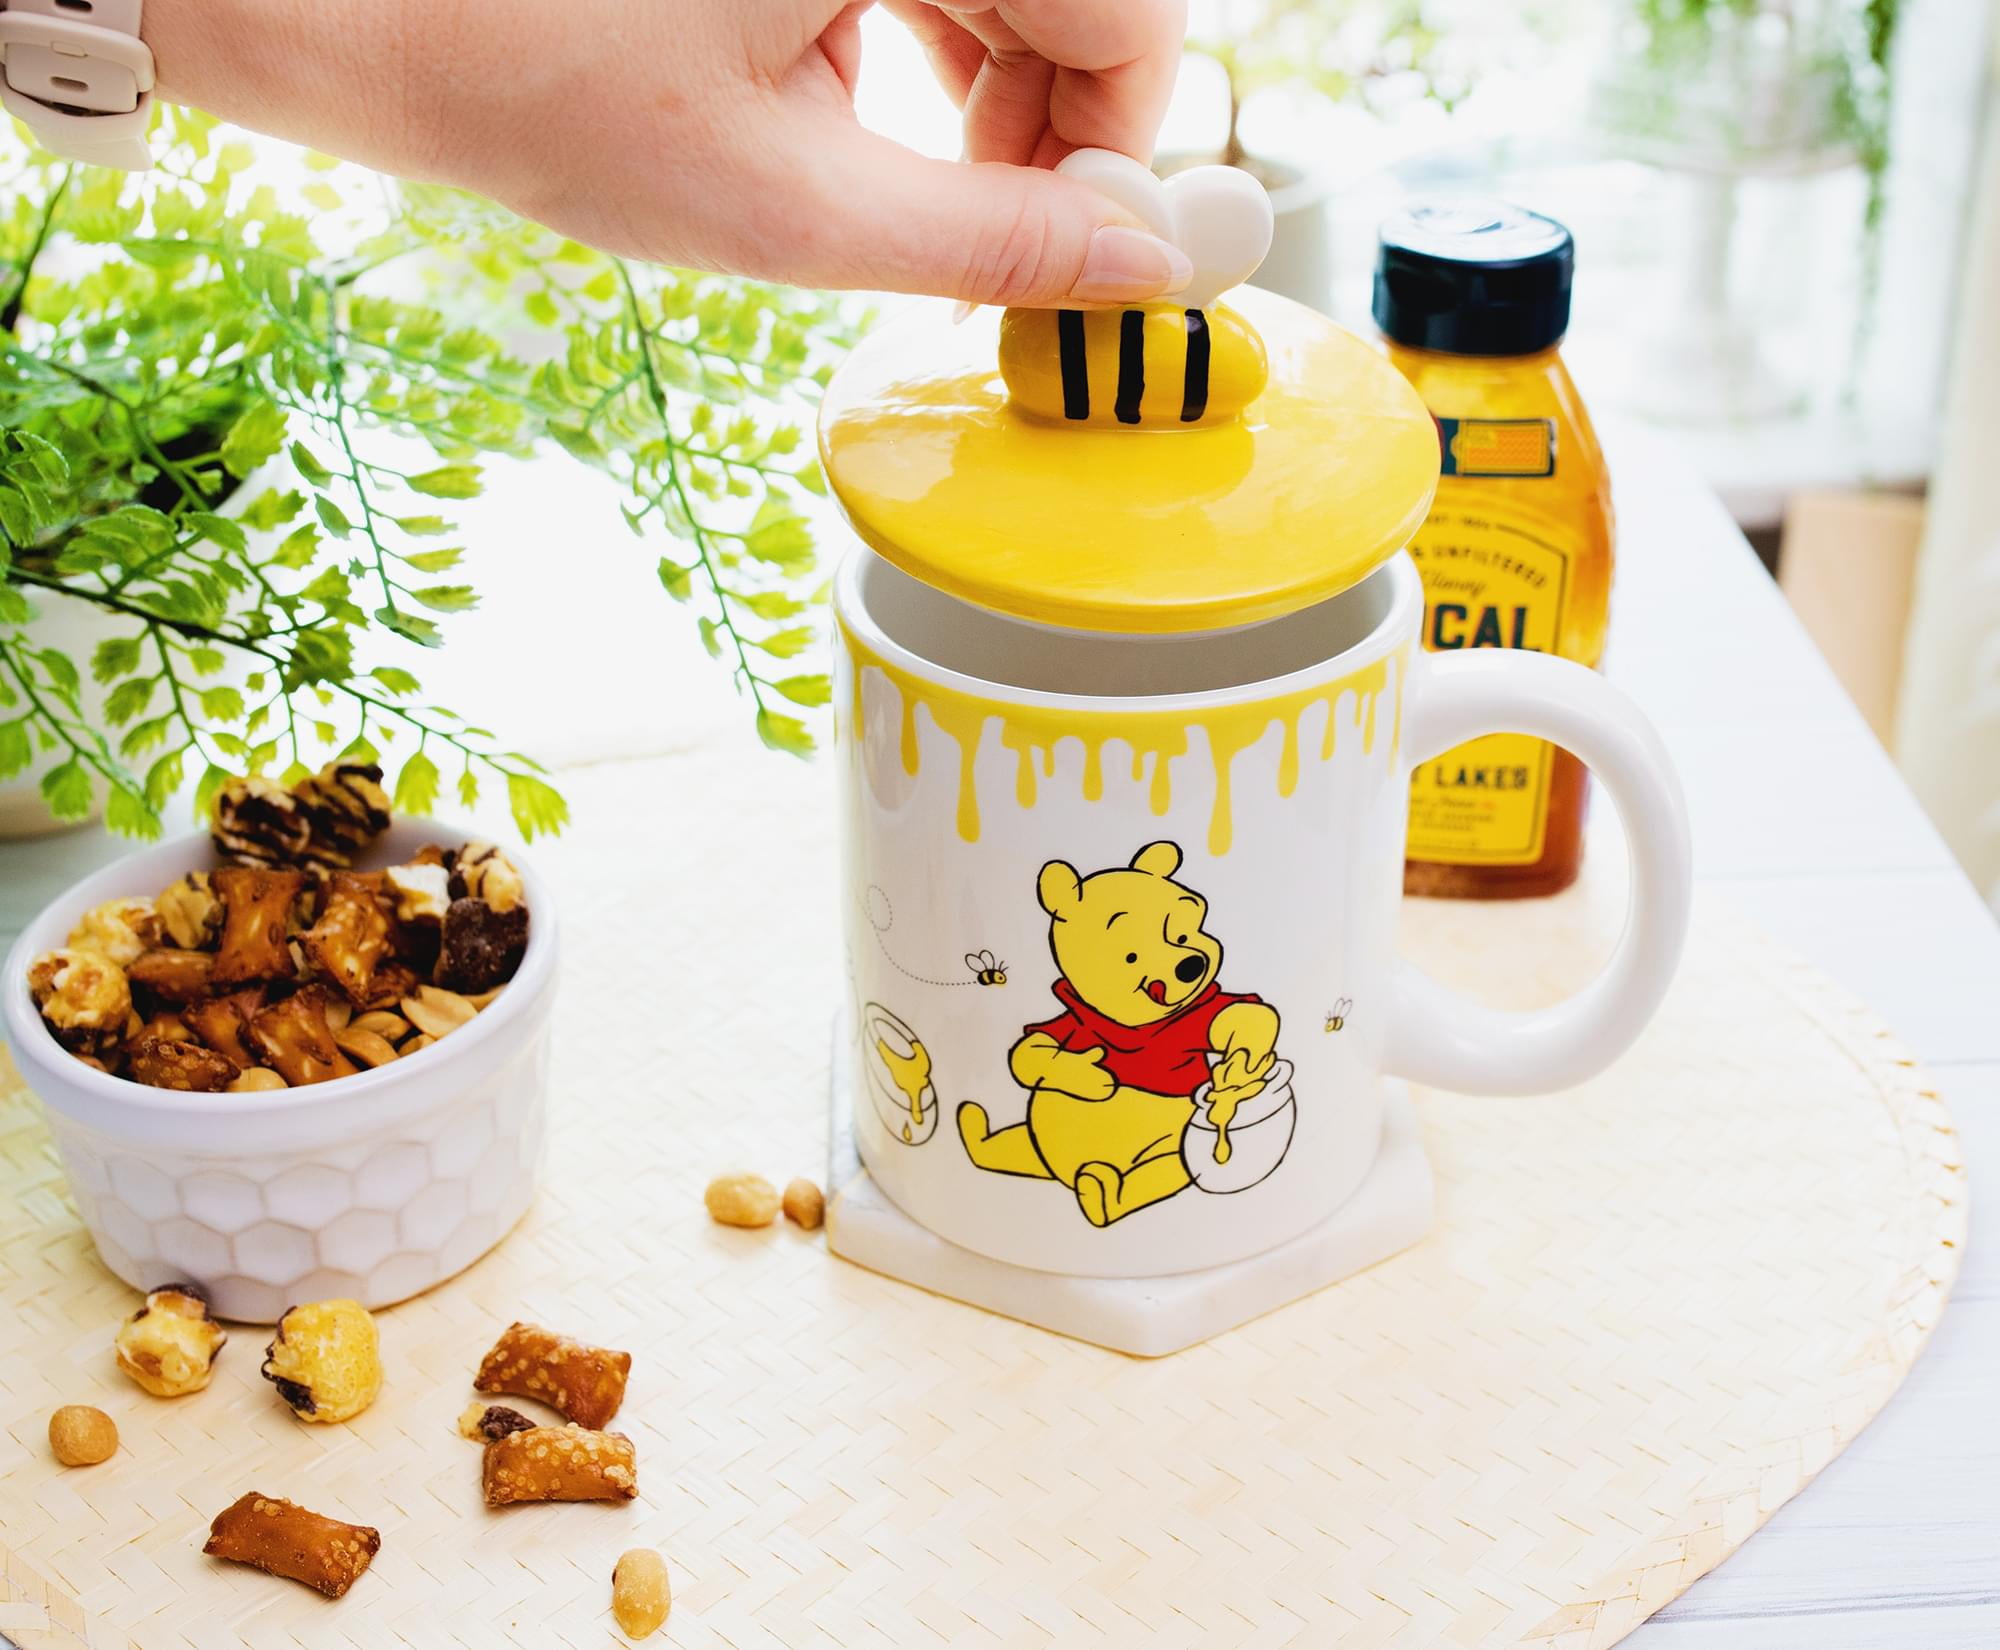 Disney Winnie the Pooh Hunny Pot Sculpted Ceramic Mug with Lid